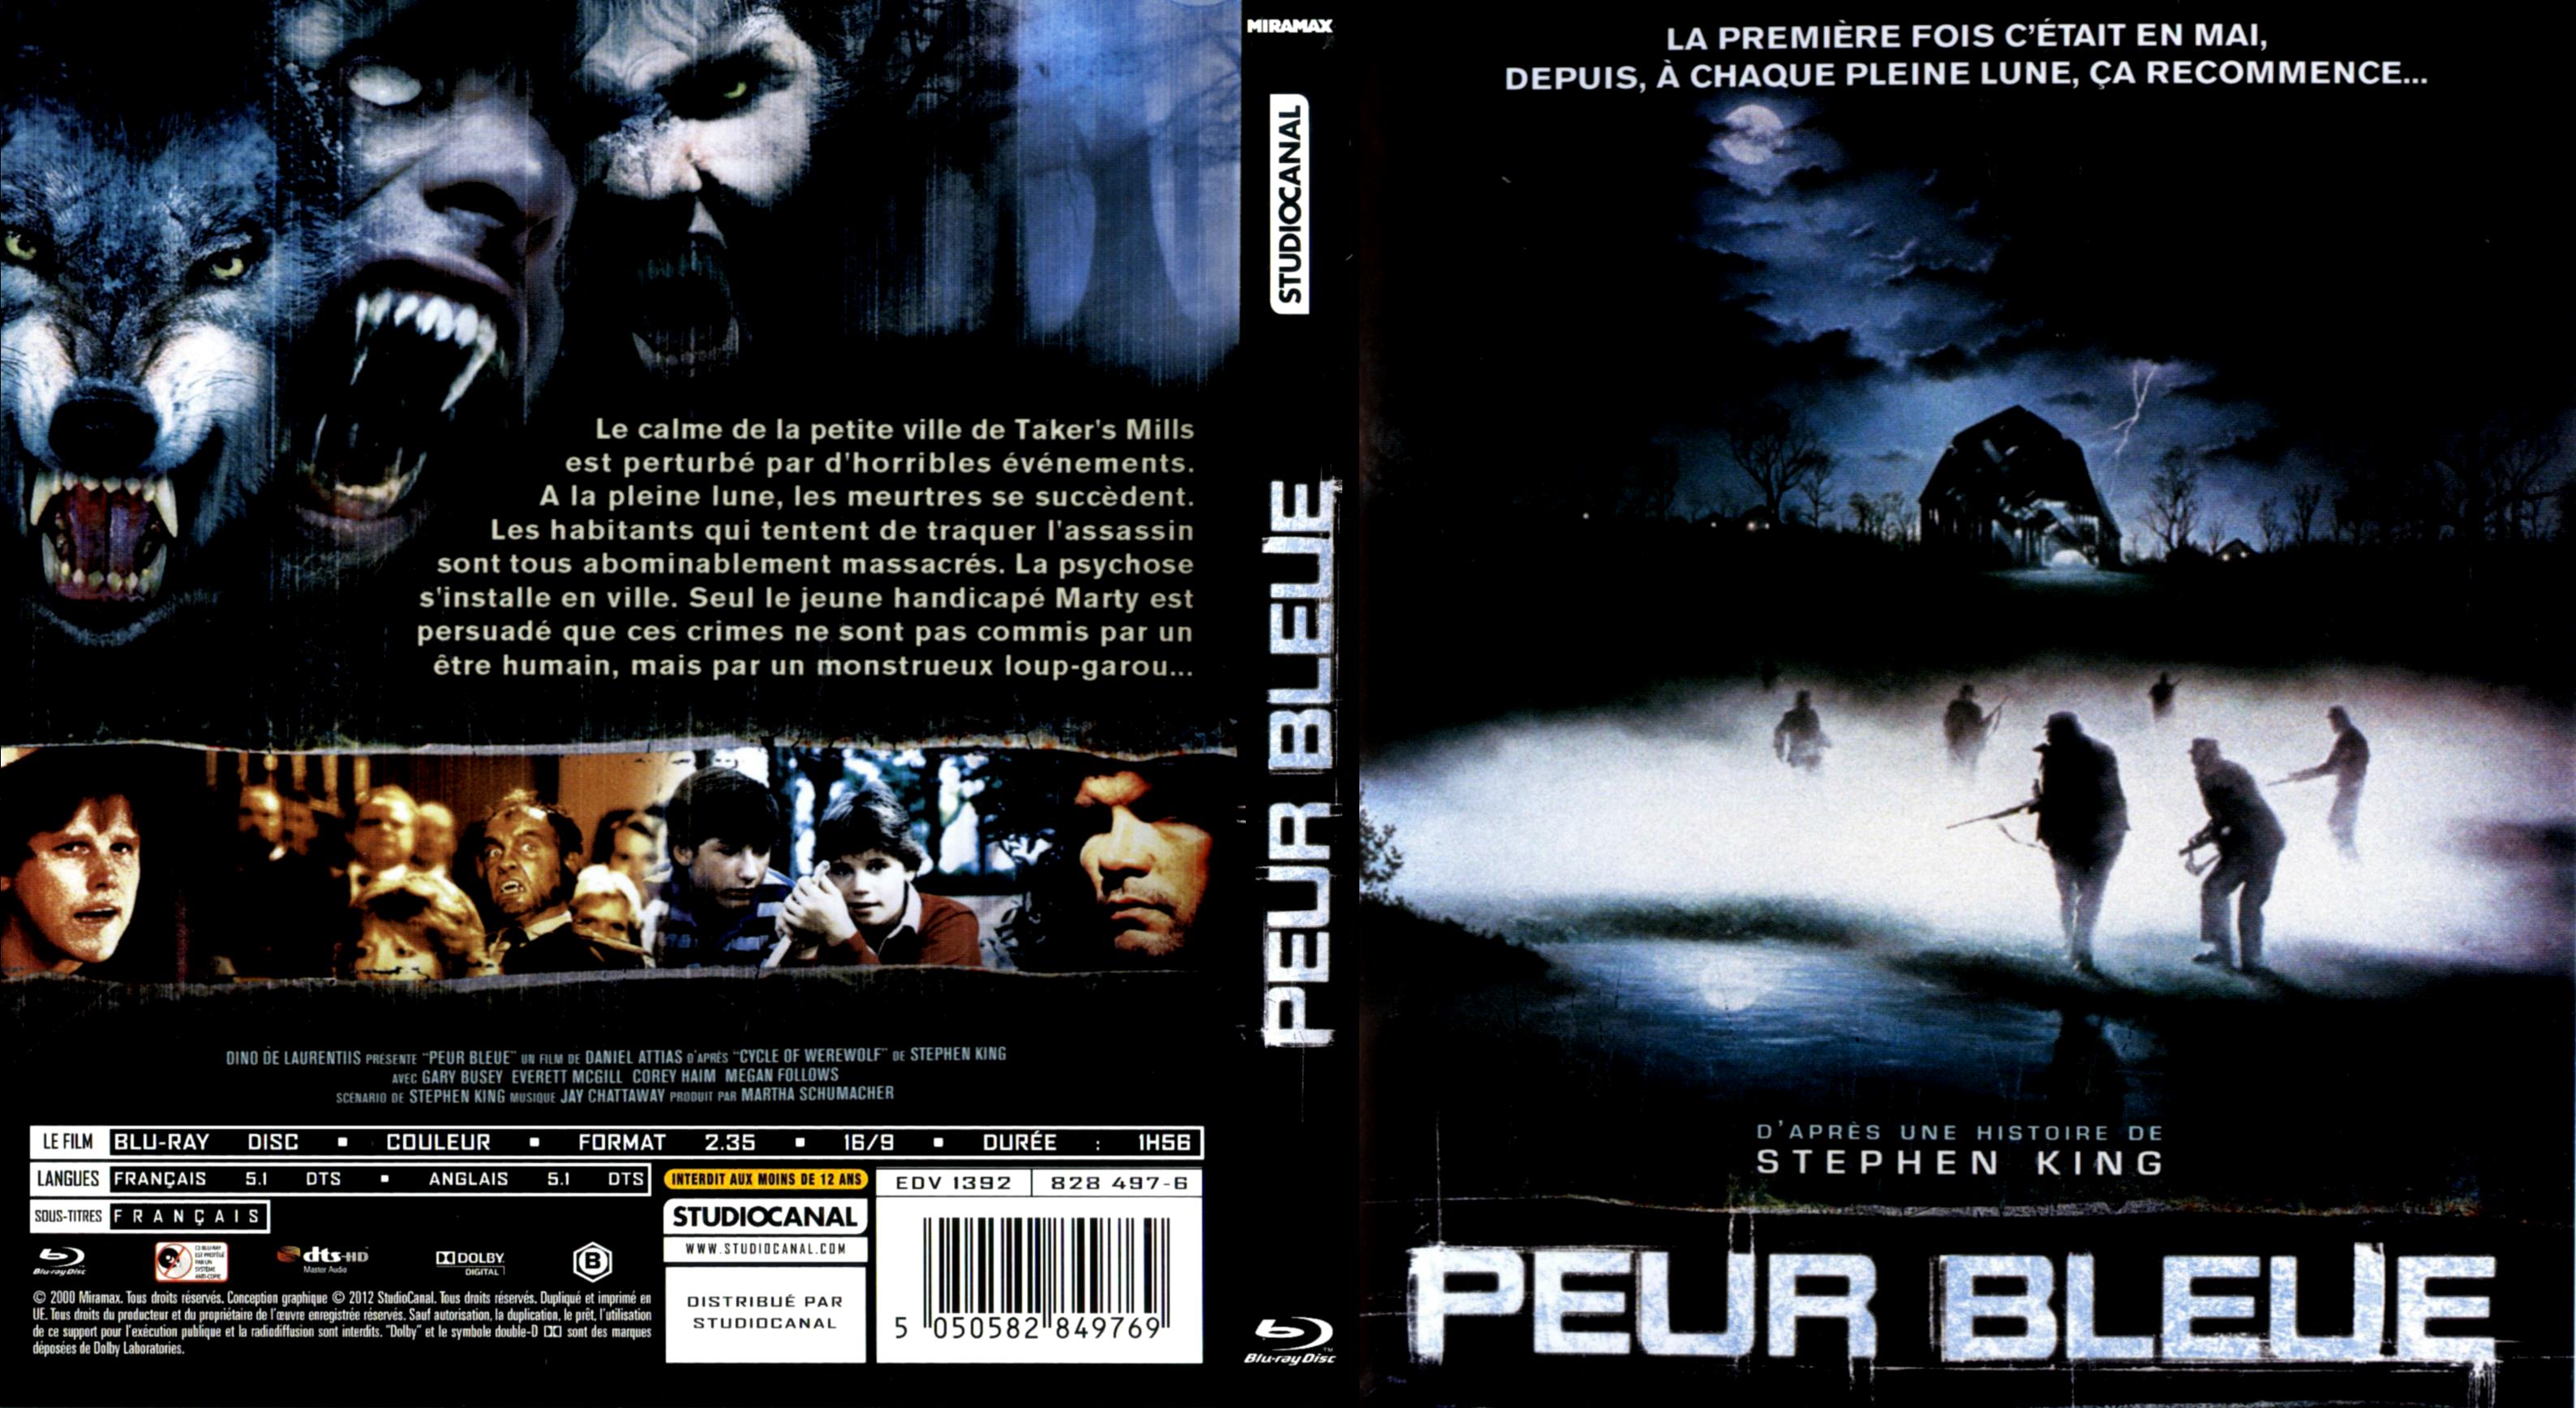 Jaquette DVD Peur bleue (stephen king)custom (BLU-RAY)